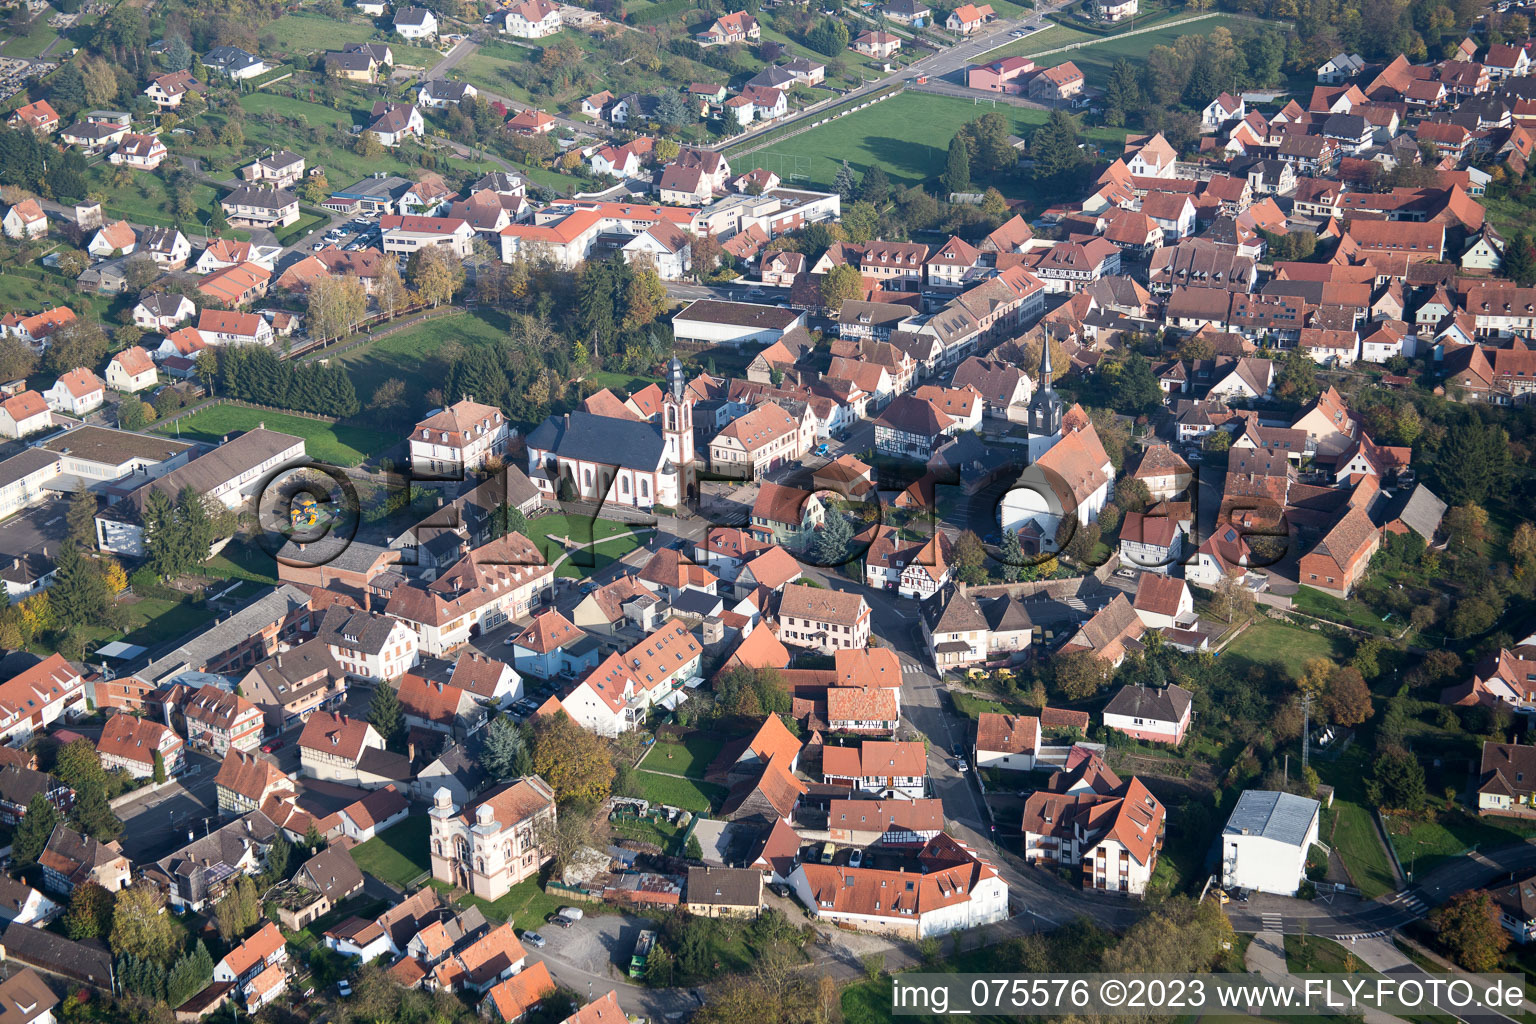 Luftbild von Soultz-sous-Forêts im Bundesland Bas-Rhin, Frankreich